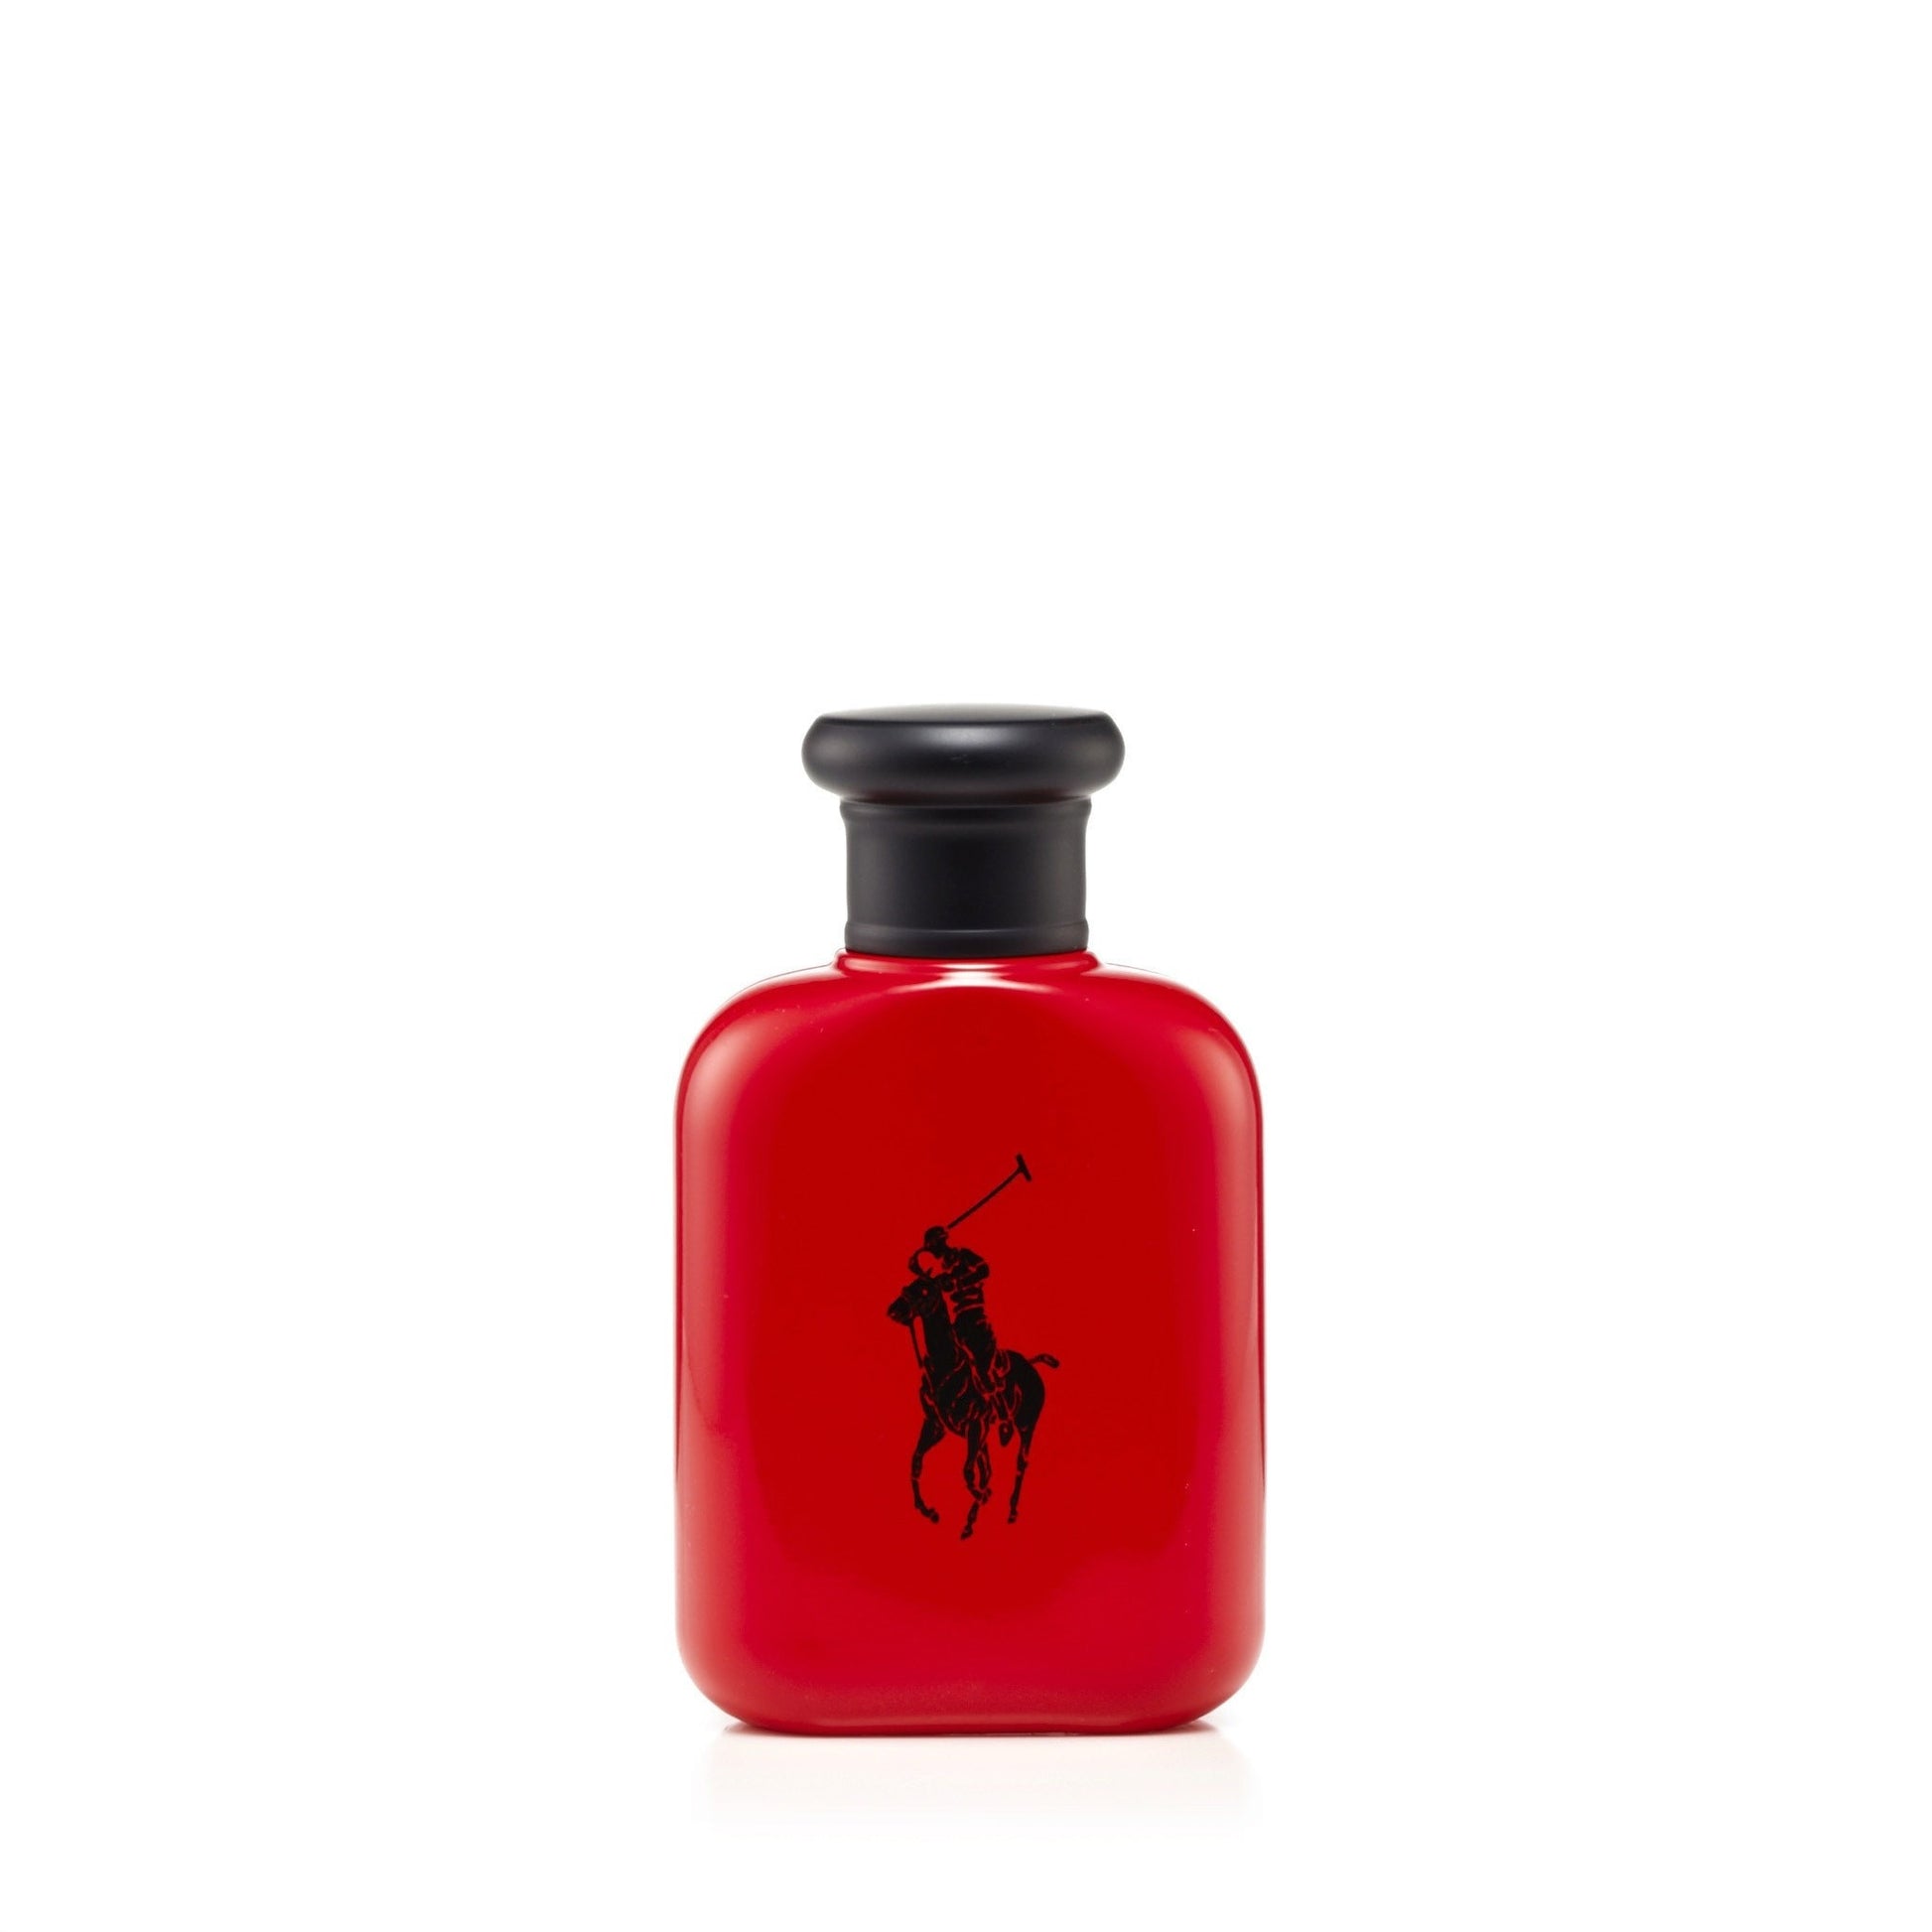 Ralph Lauren Polo Red Eau de Toilette Mens Spray 2.5 oz.  Click to open in modal